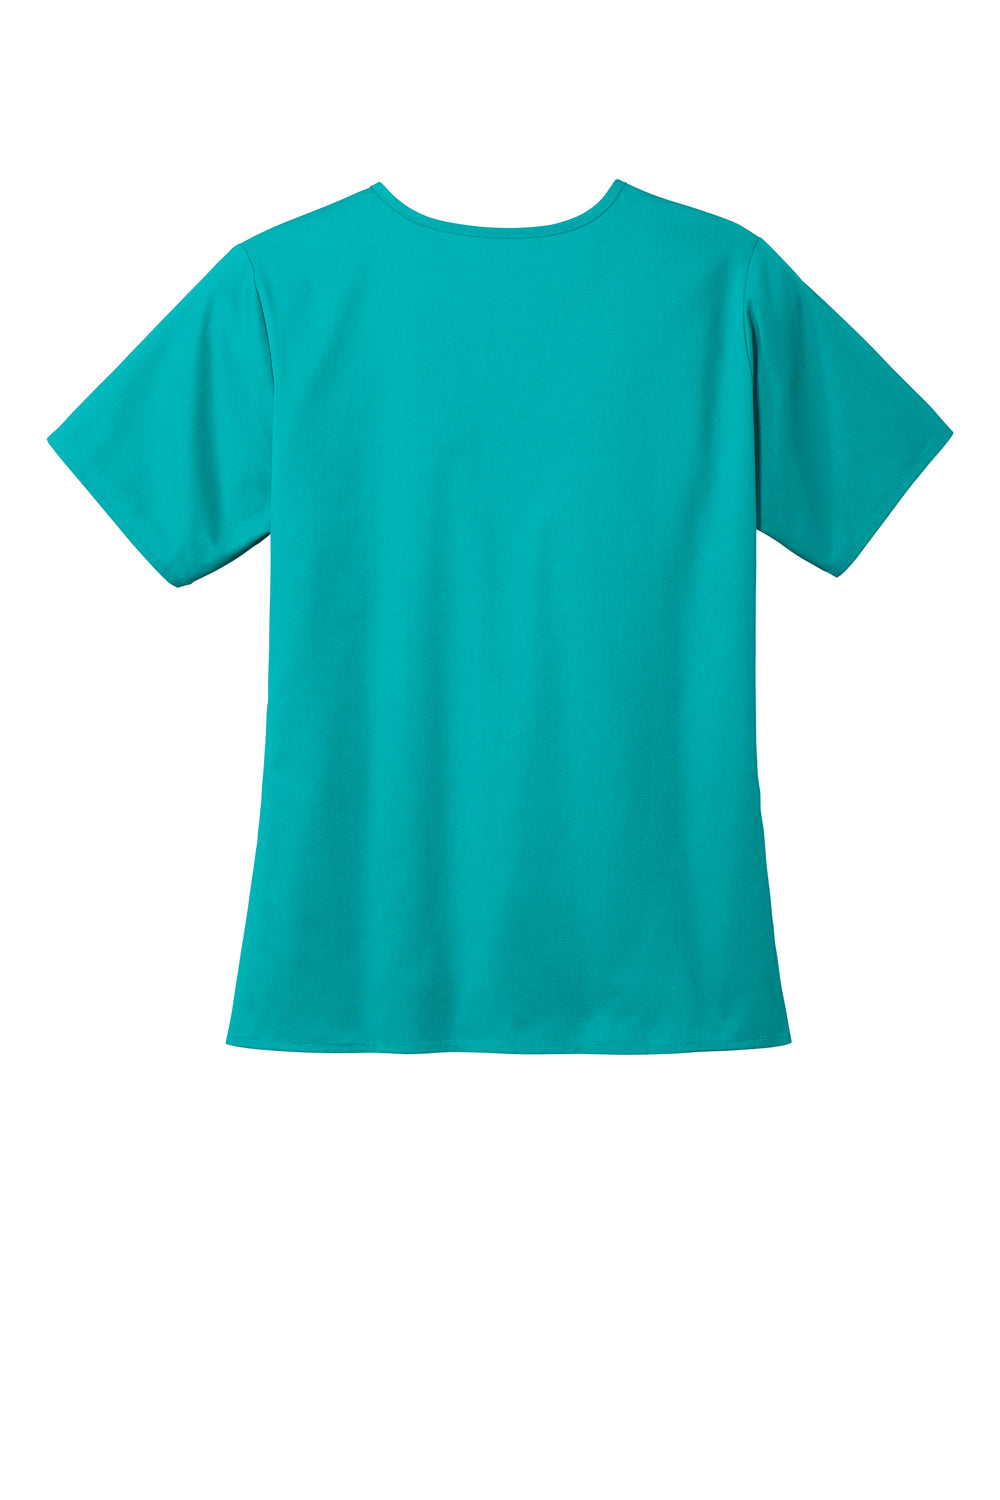 Wonderwink WW4560 WorkFlex Short Sleeve V-Neck Shirt Teal Blue Flat Back